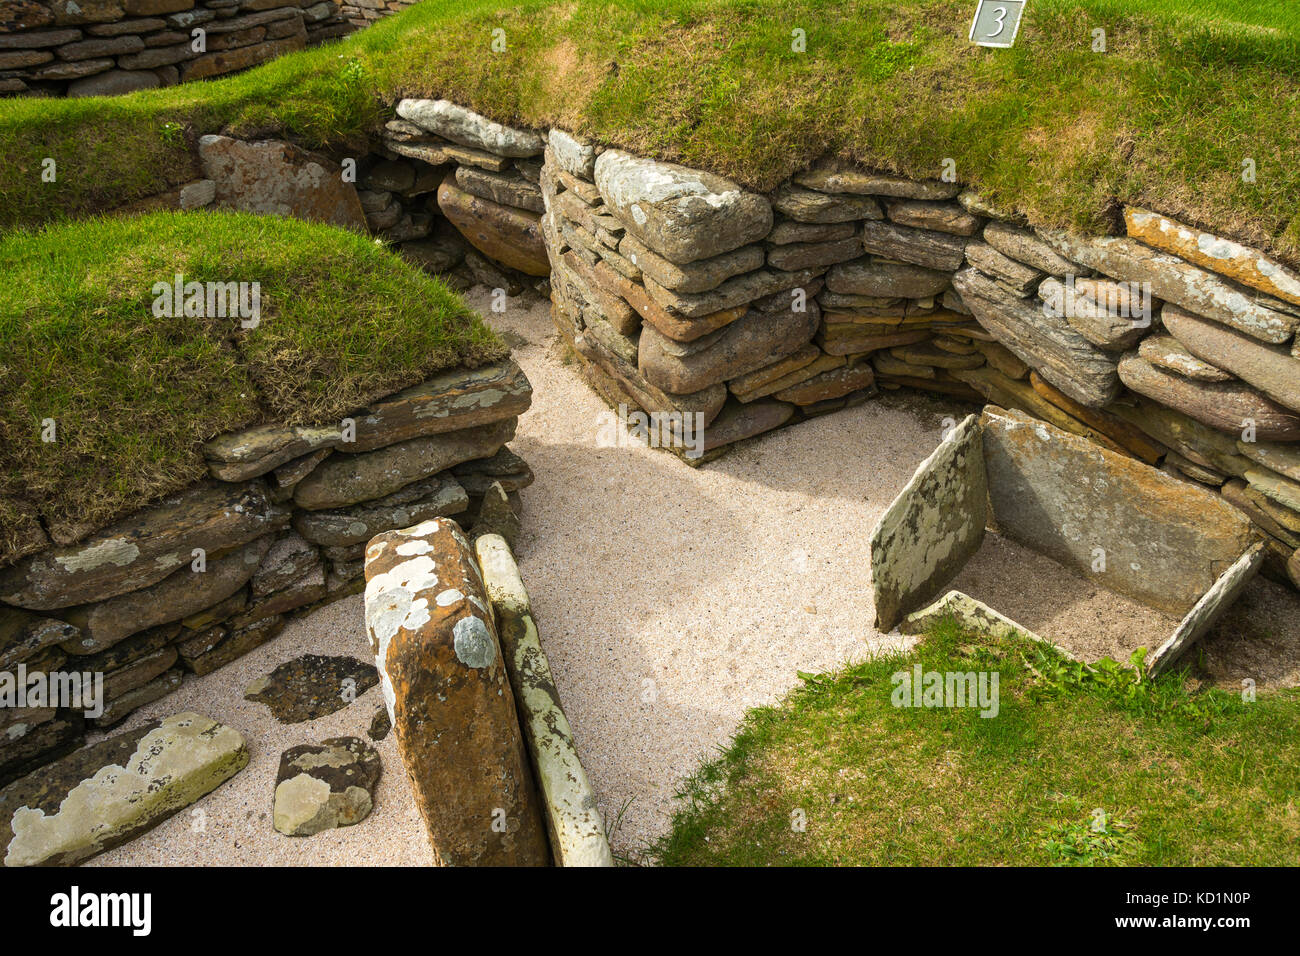 No. 3 dwelling at Skara Brae Neolithic Village.,Orkney Mainland, Scotland, UK. Stock Photo